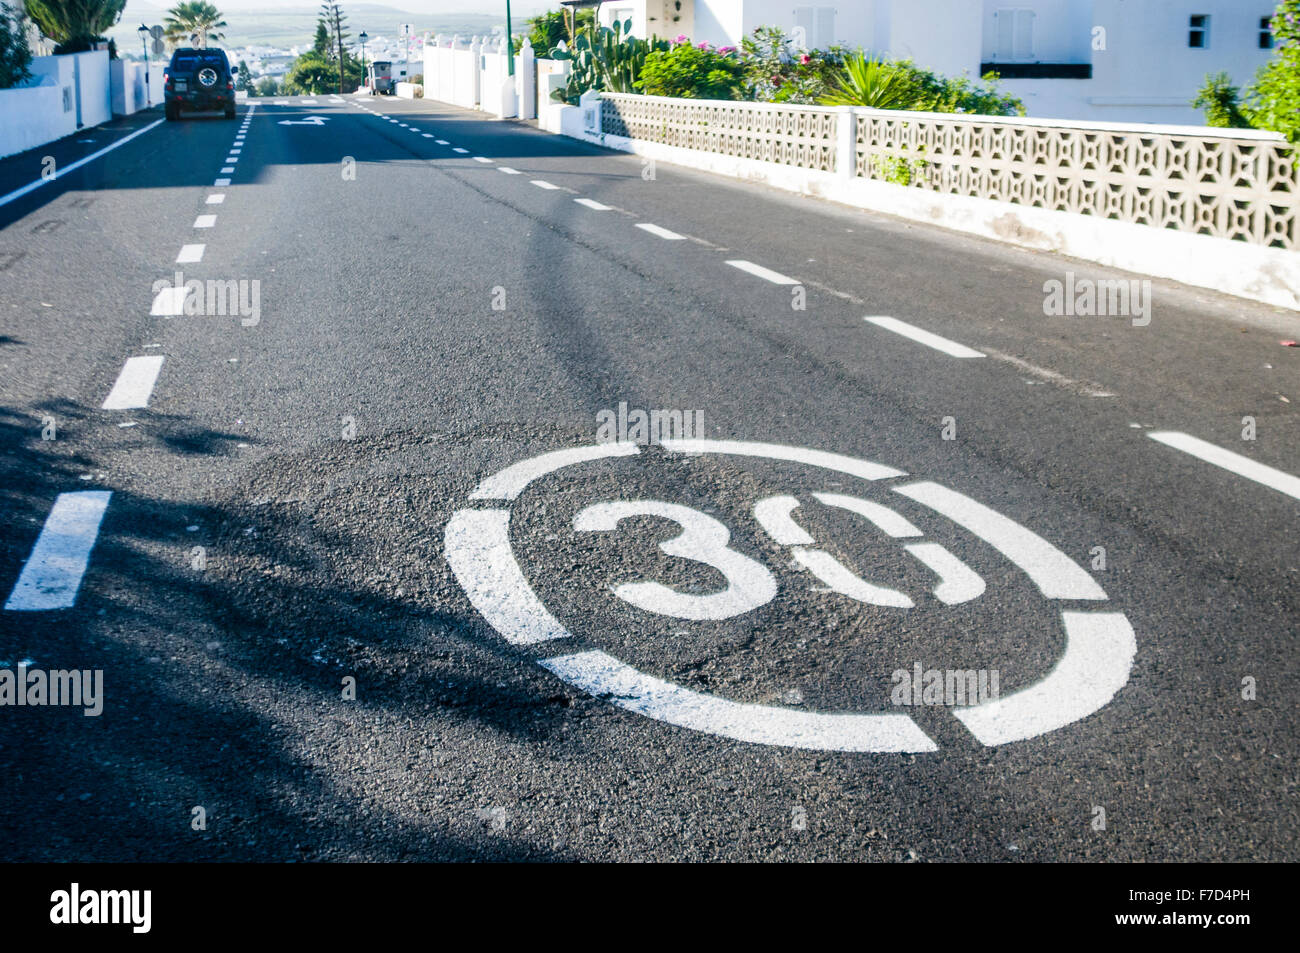 30 Miles Per Hour Speed Sign Stock Photos & 30 Miles Per Hour Speed